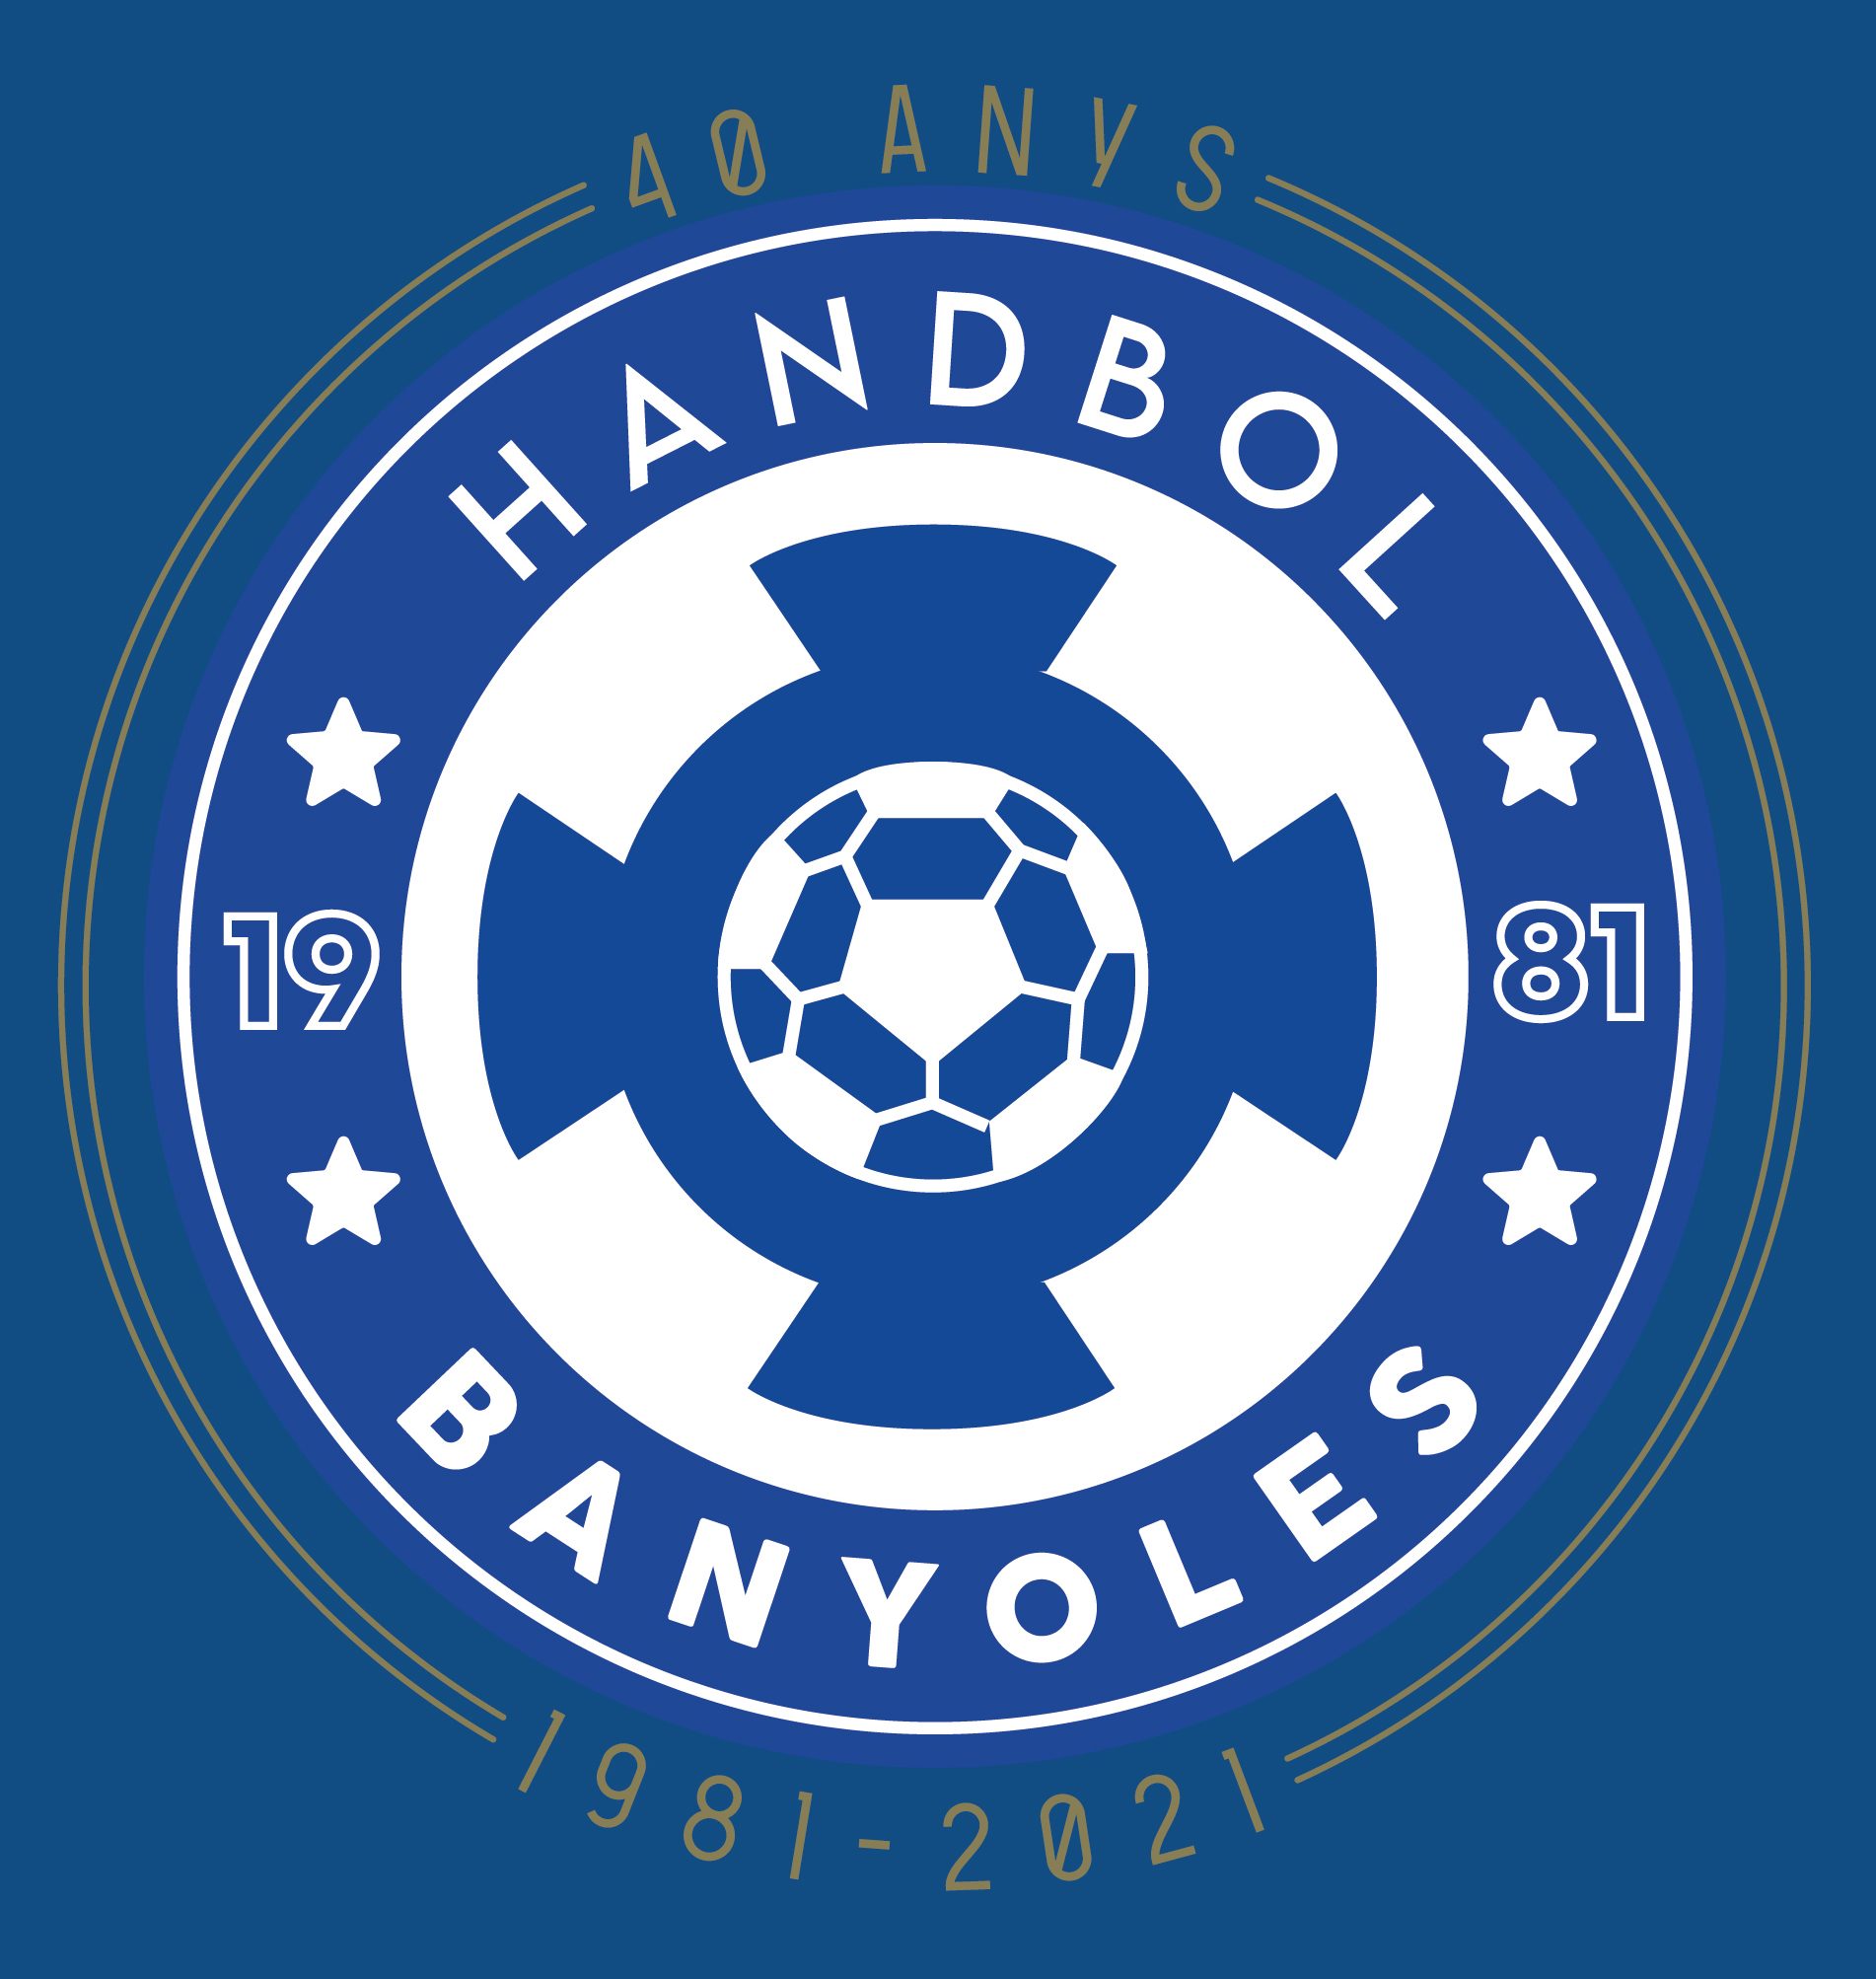 Handbol Banyoles